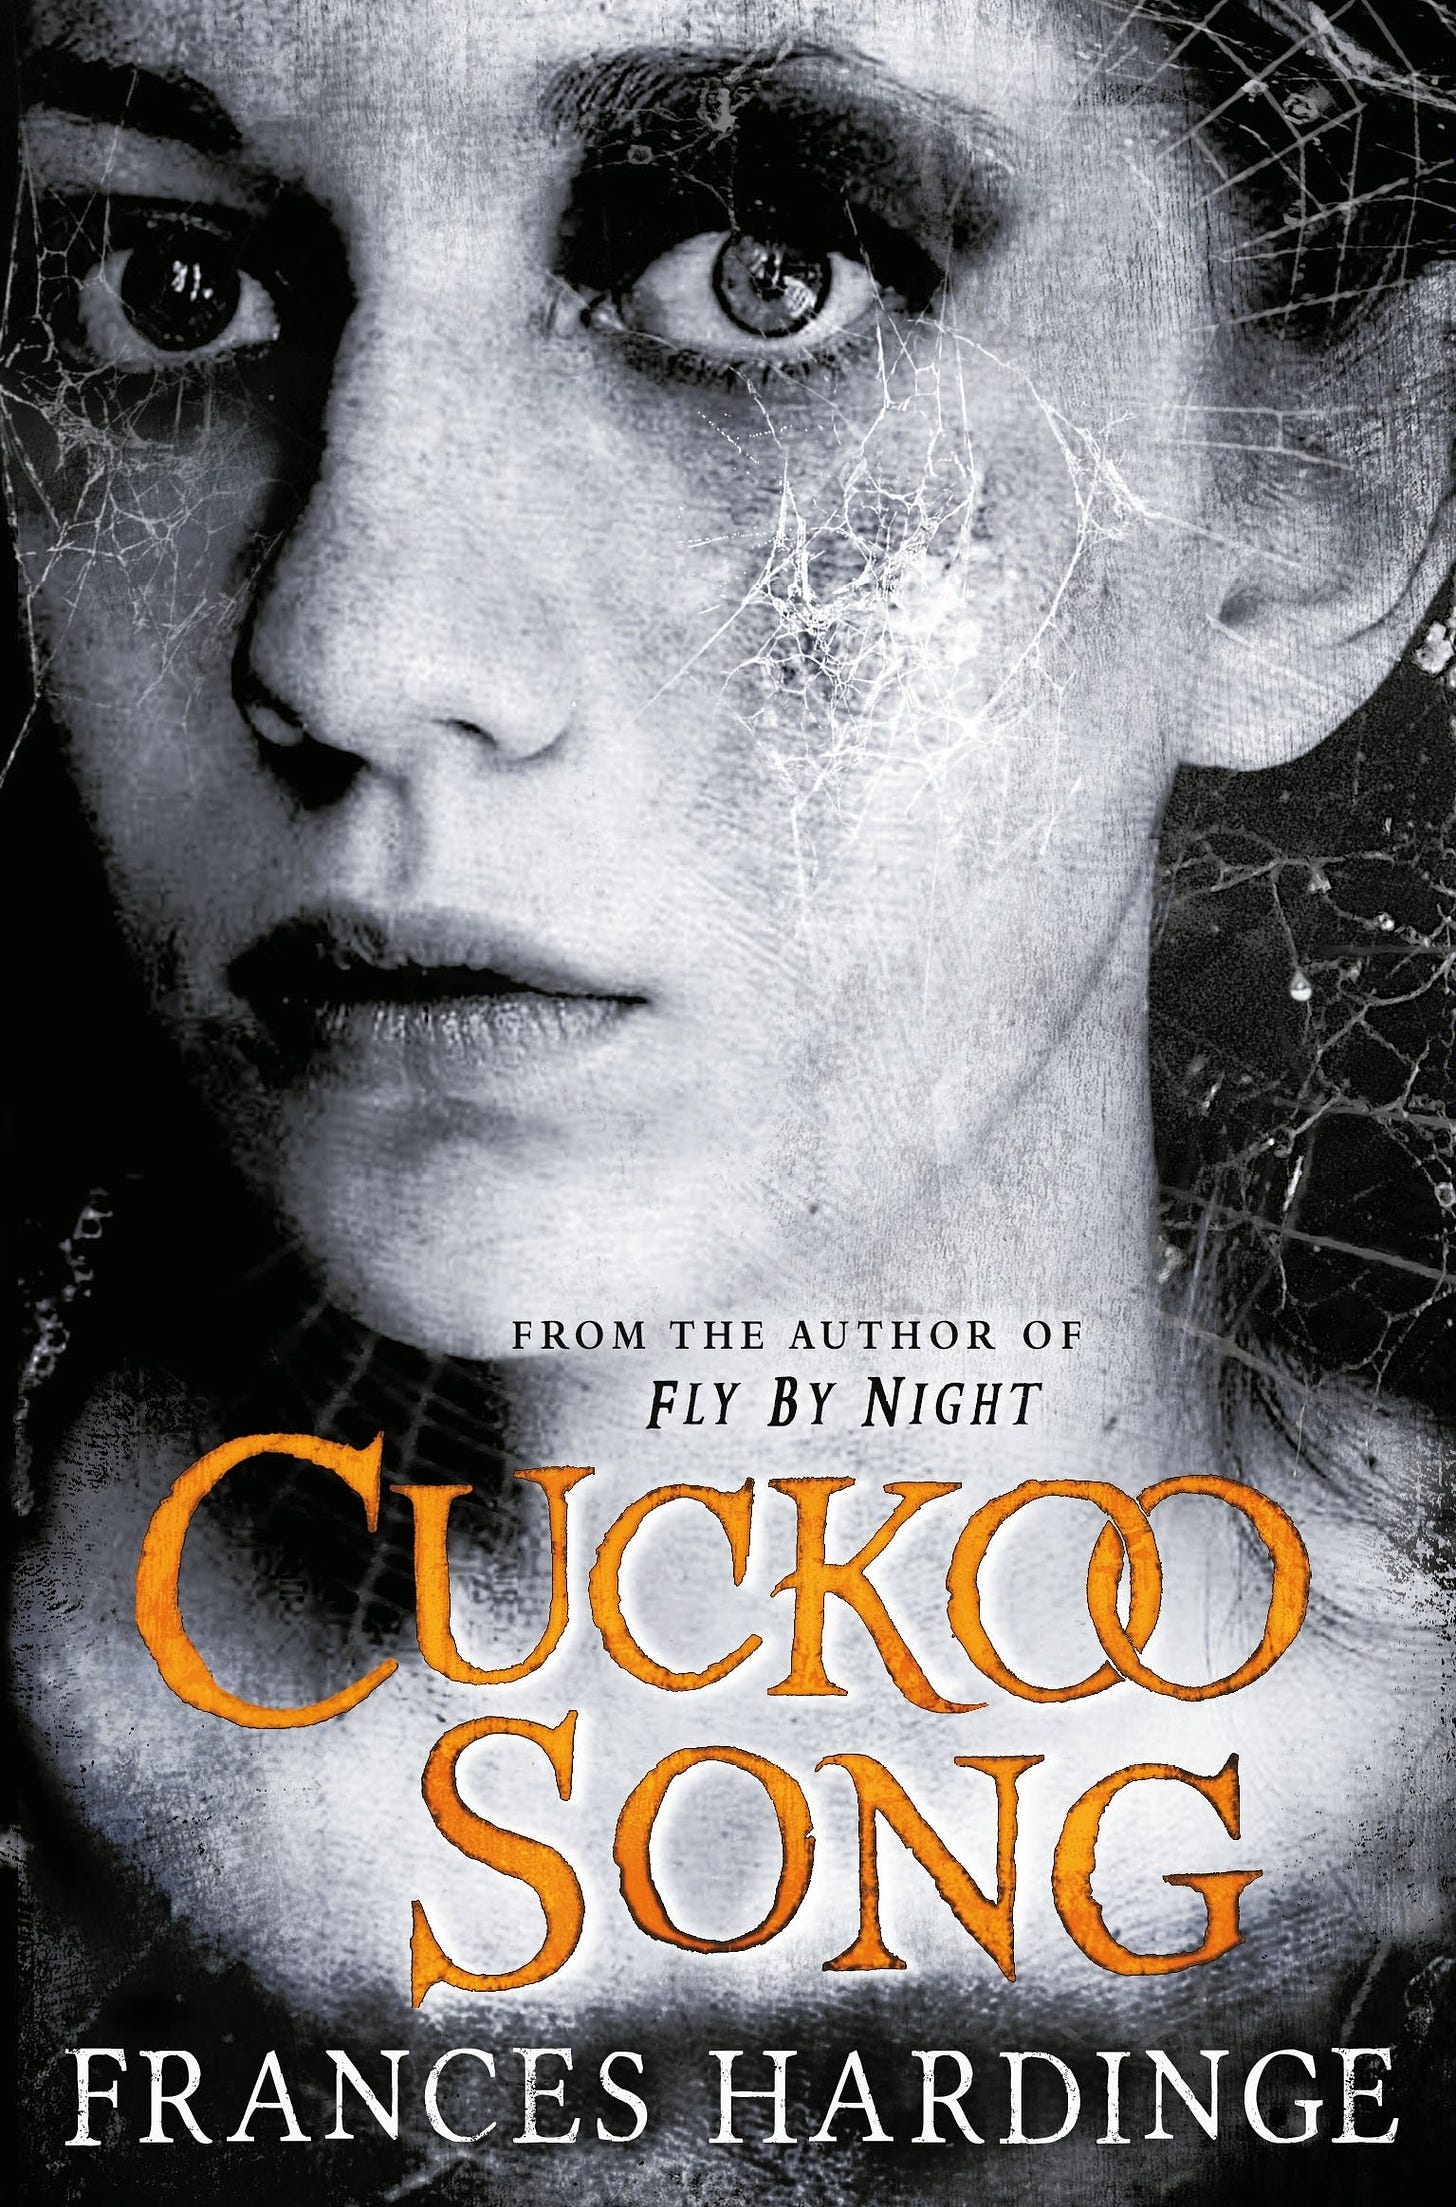 Cuckoo Song [Paperback] [Jan 01, 2012] Frances Hardinge: Frances Hardinge:  9780330519731: Amazon.com: Books